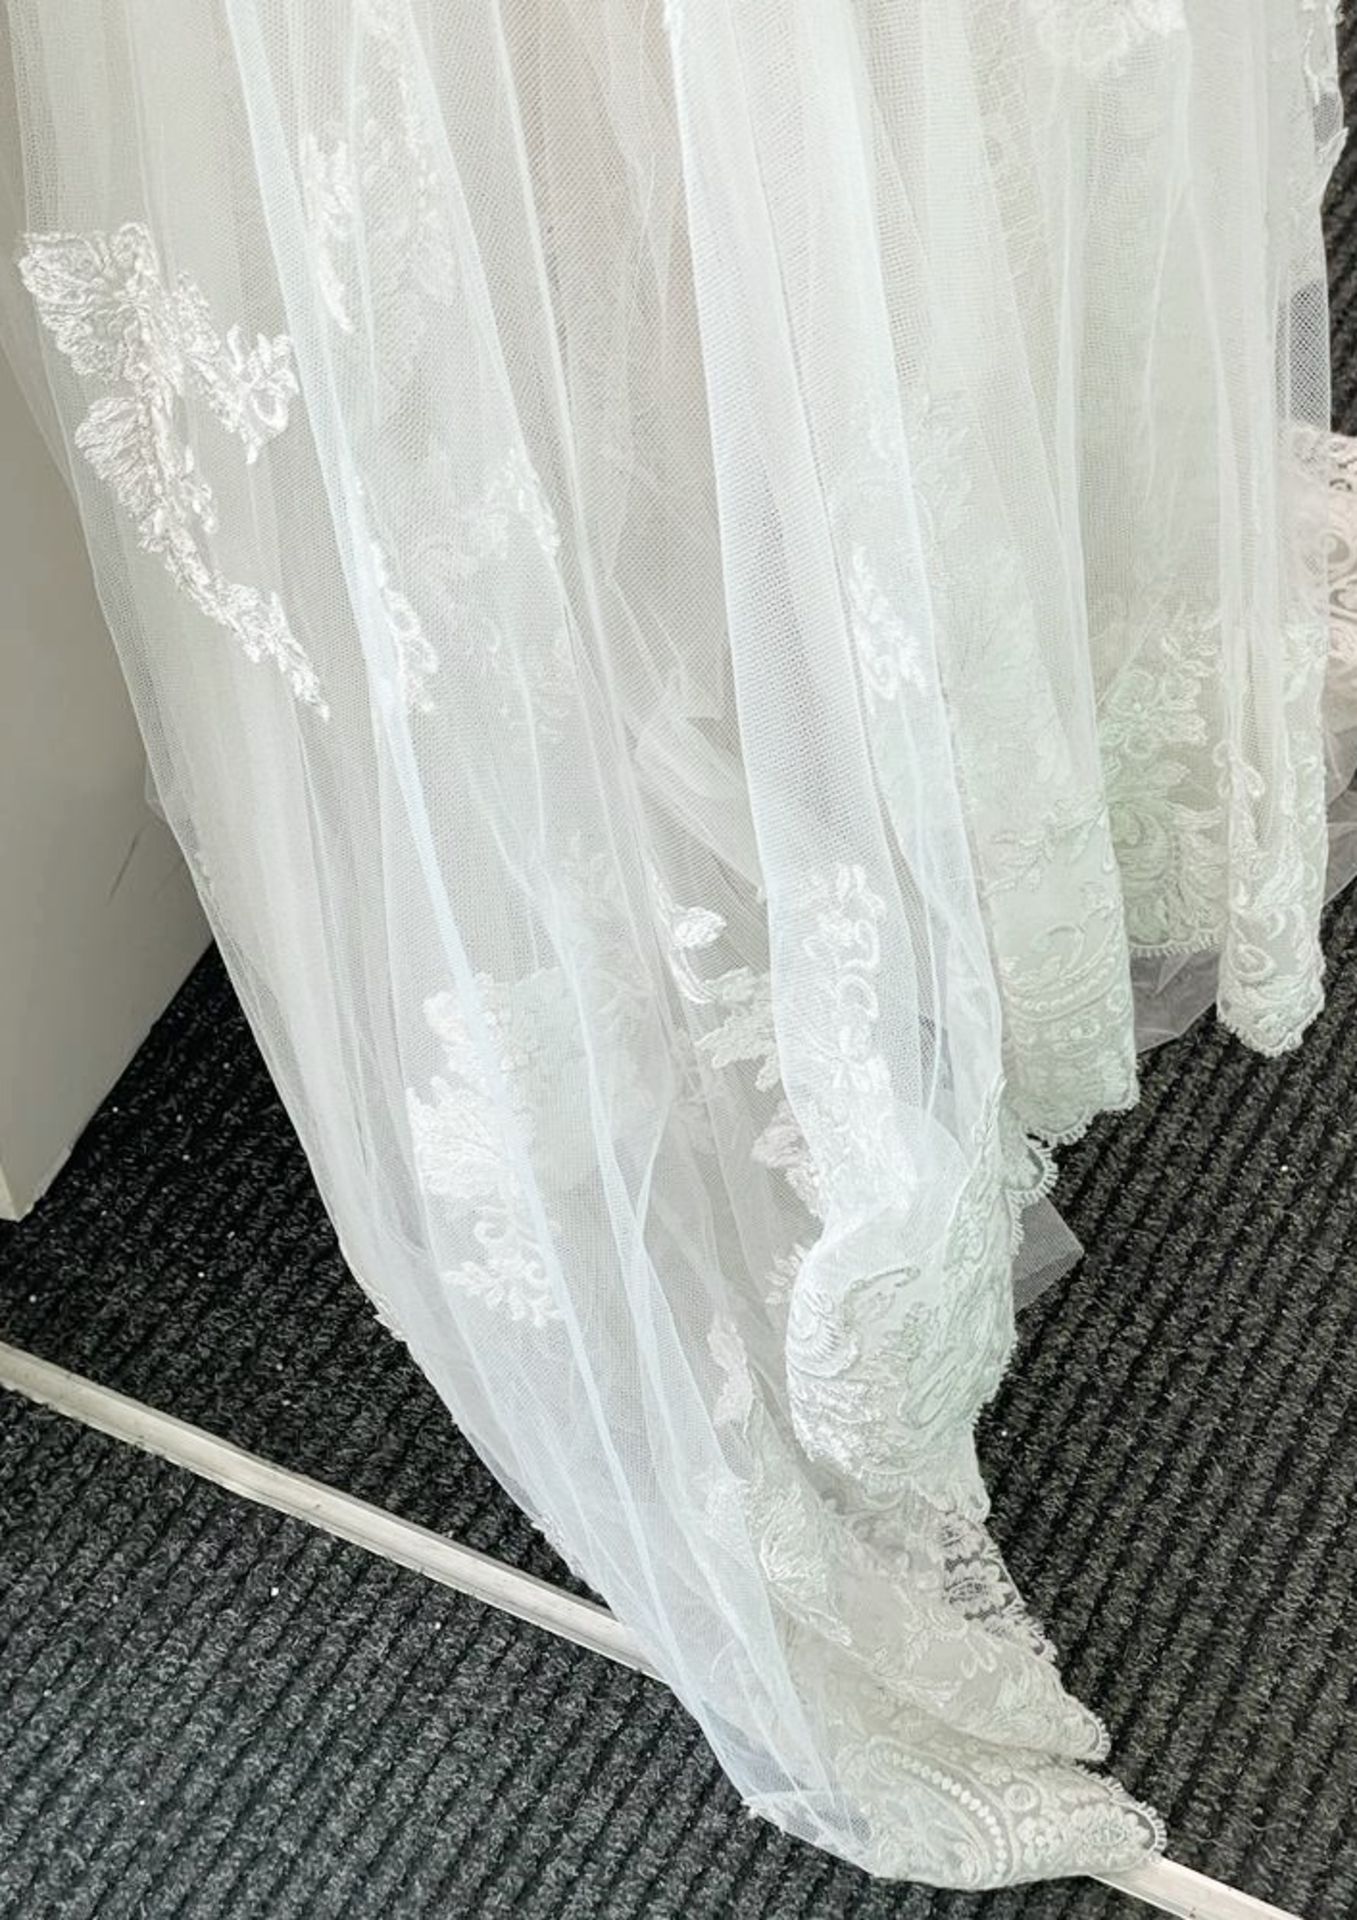 1 x DIANA LEGRANDE '7517' Designer Wedding Dress Bridal Gown - Size: UK 10 - Original RRP £1,800 - Image 11 of 18